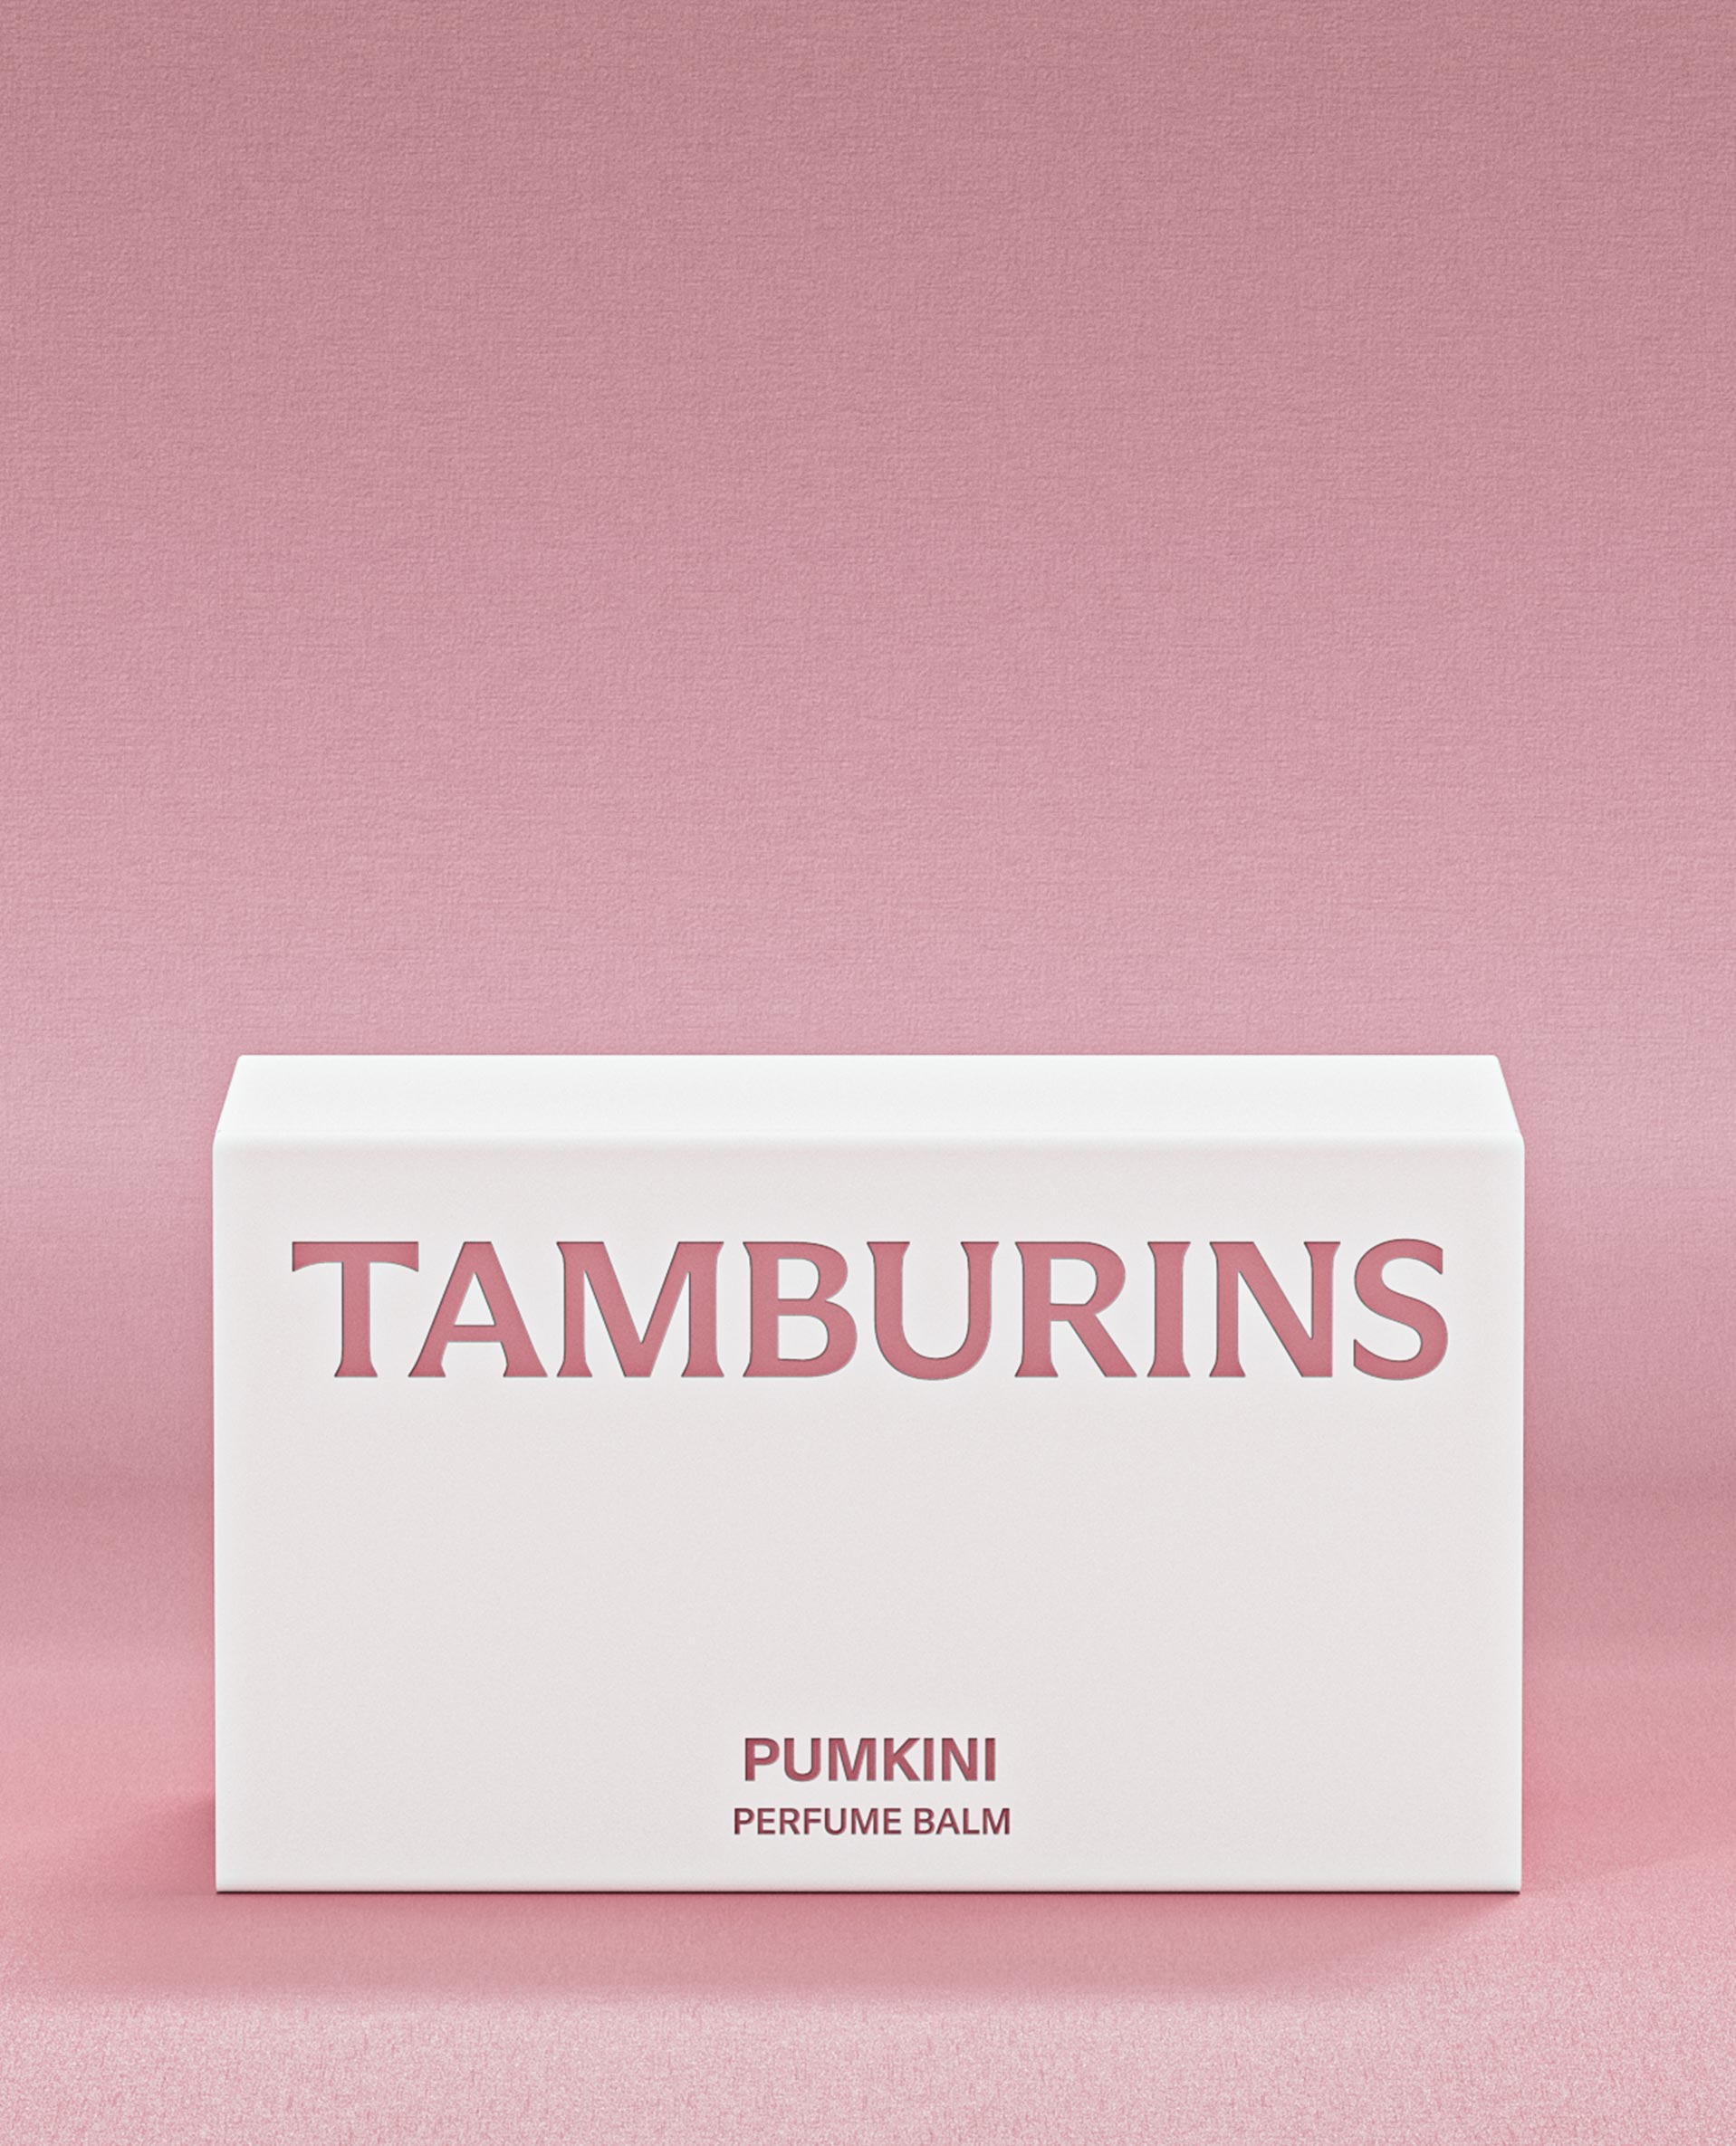 Small 6.5g box of Tamburins Perfume Balm Pumkini.